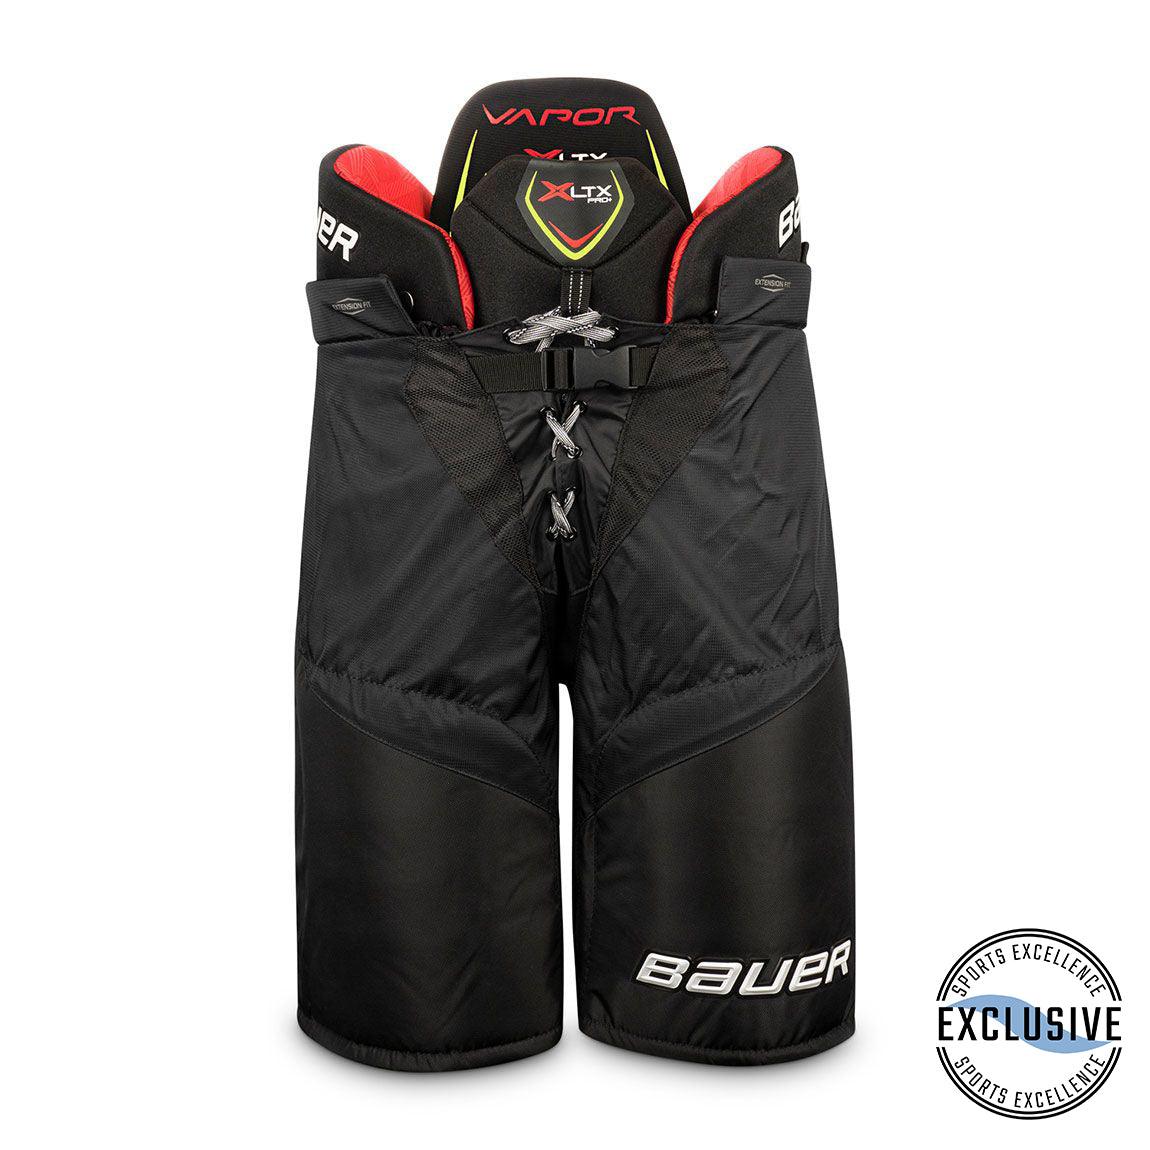 Vapor XLTX Pro+ Pants - Senior - Sports Excellence